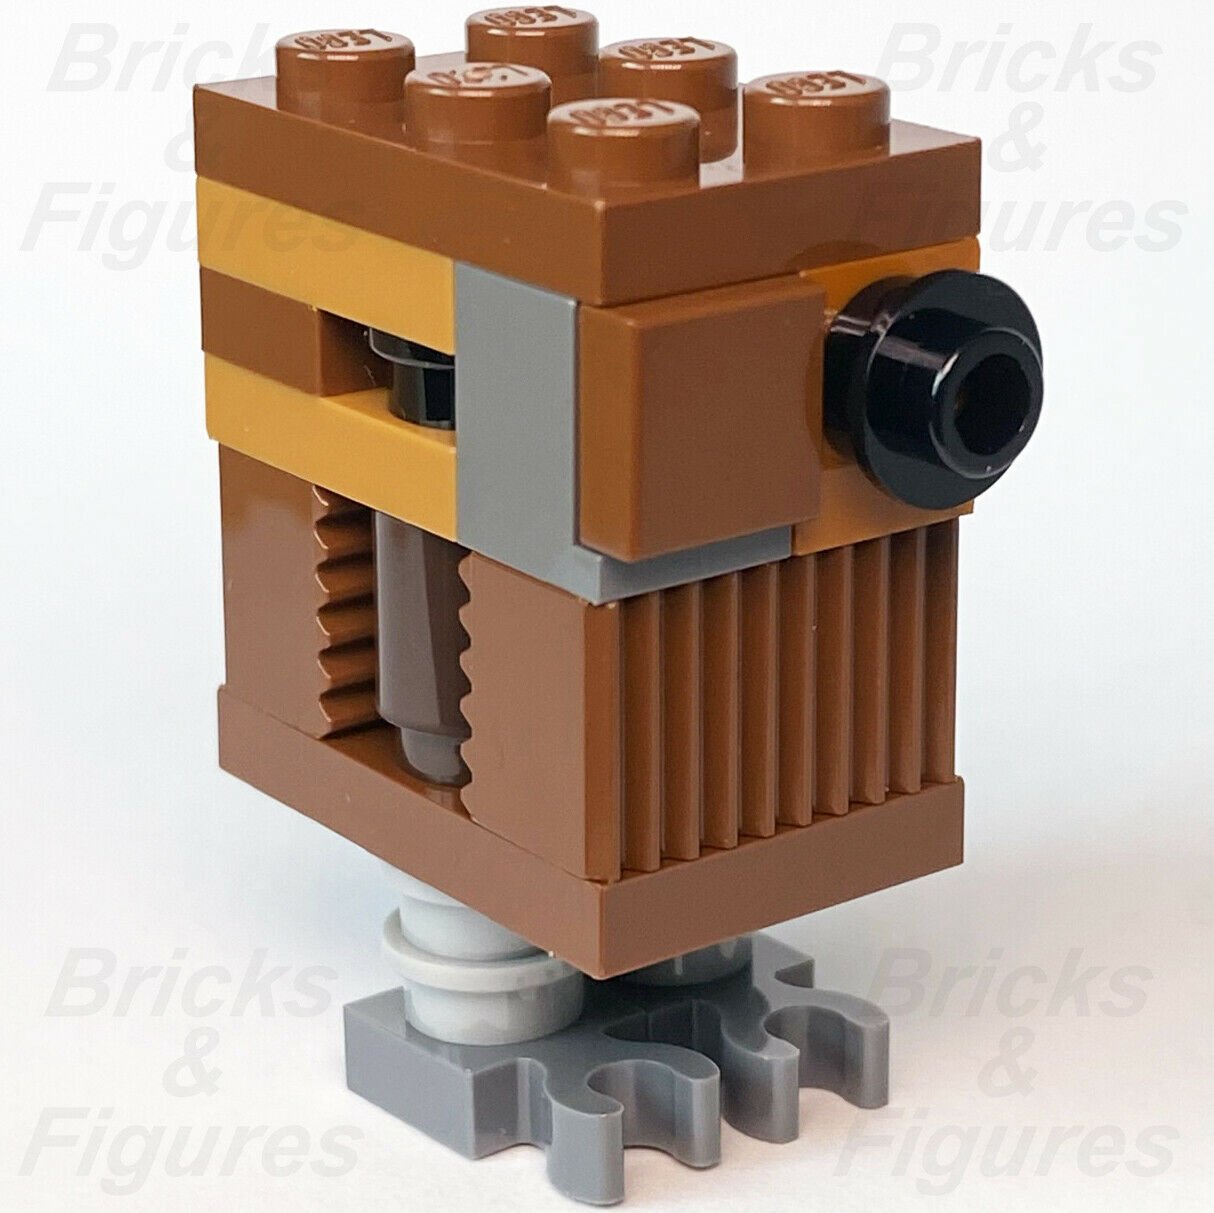 New Star Wars LEGO GNK Power Gonk Droid Reddish Brown Minifigure 75146 - Bricks & Figures